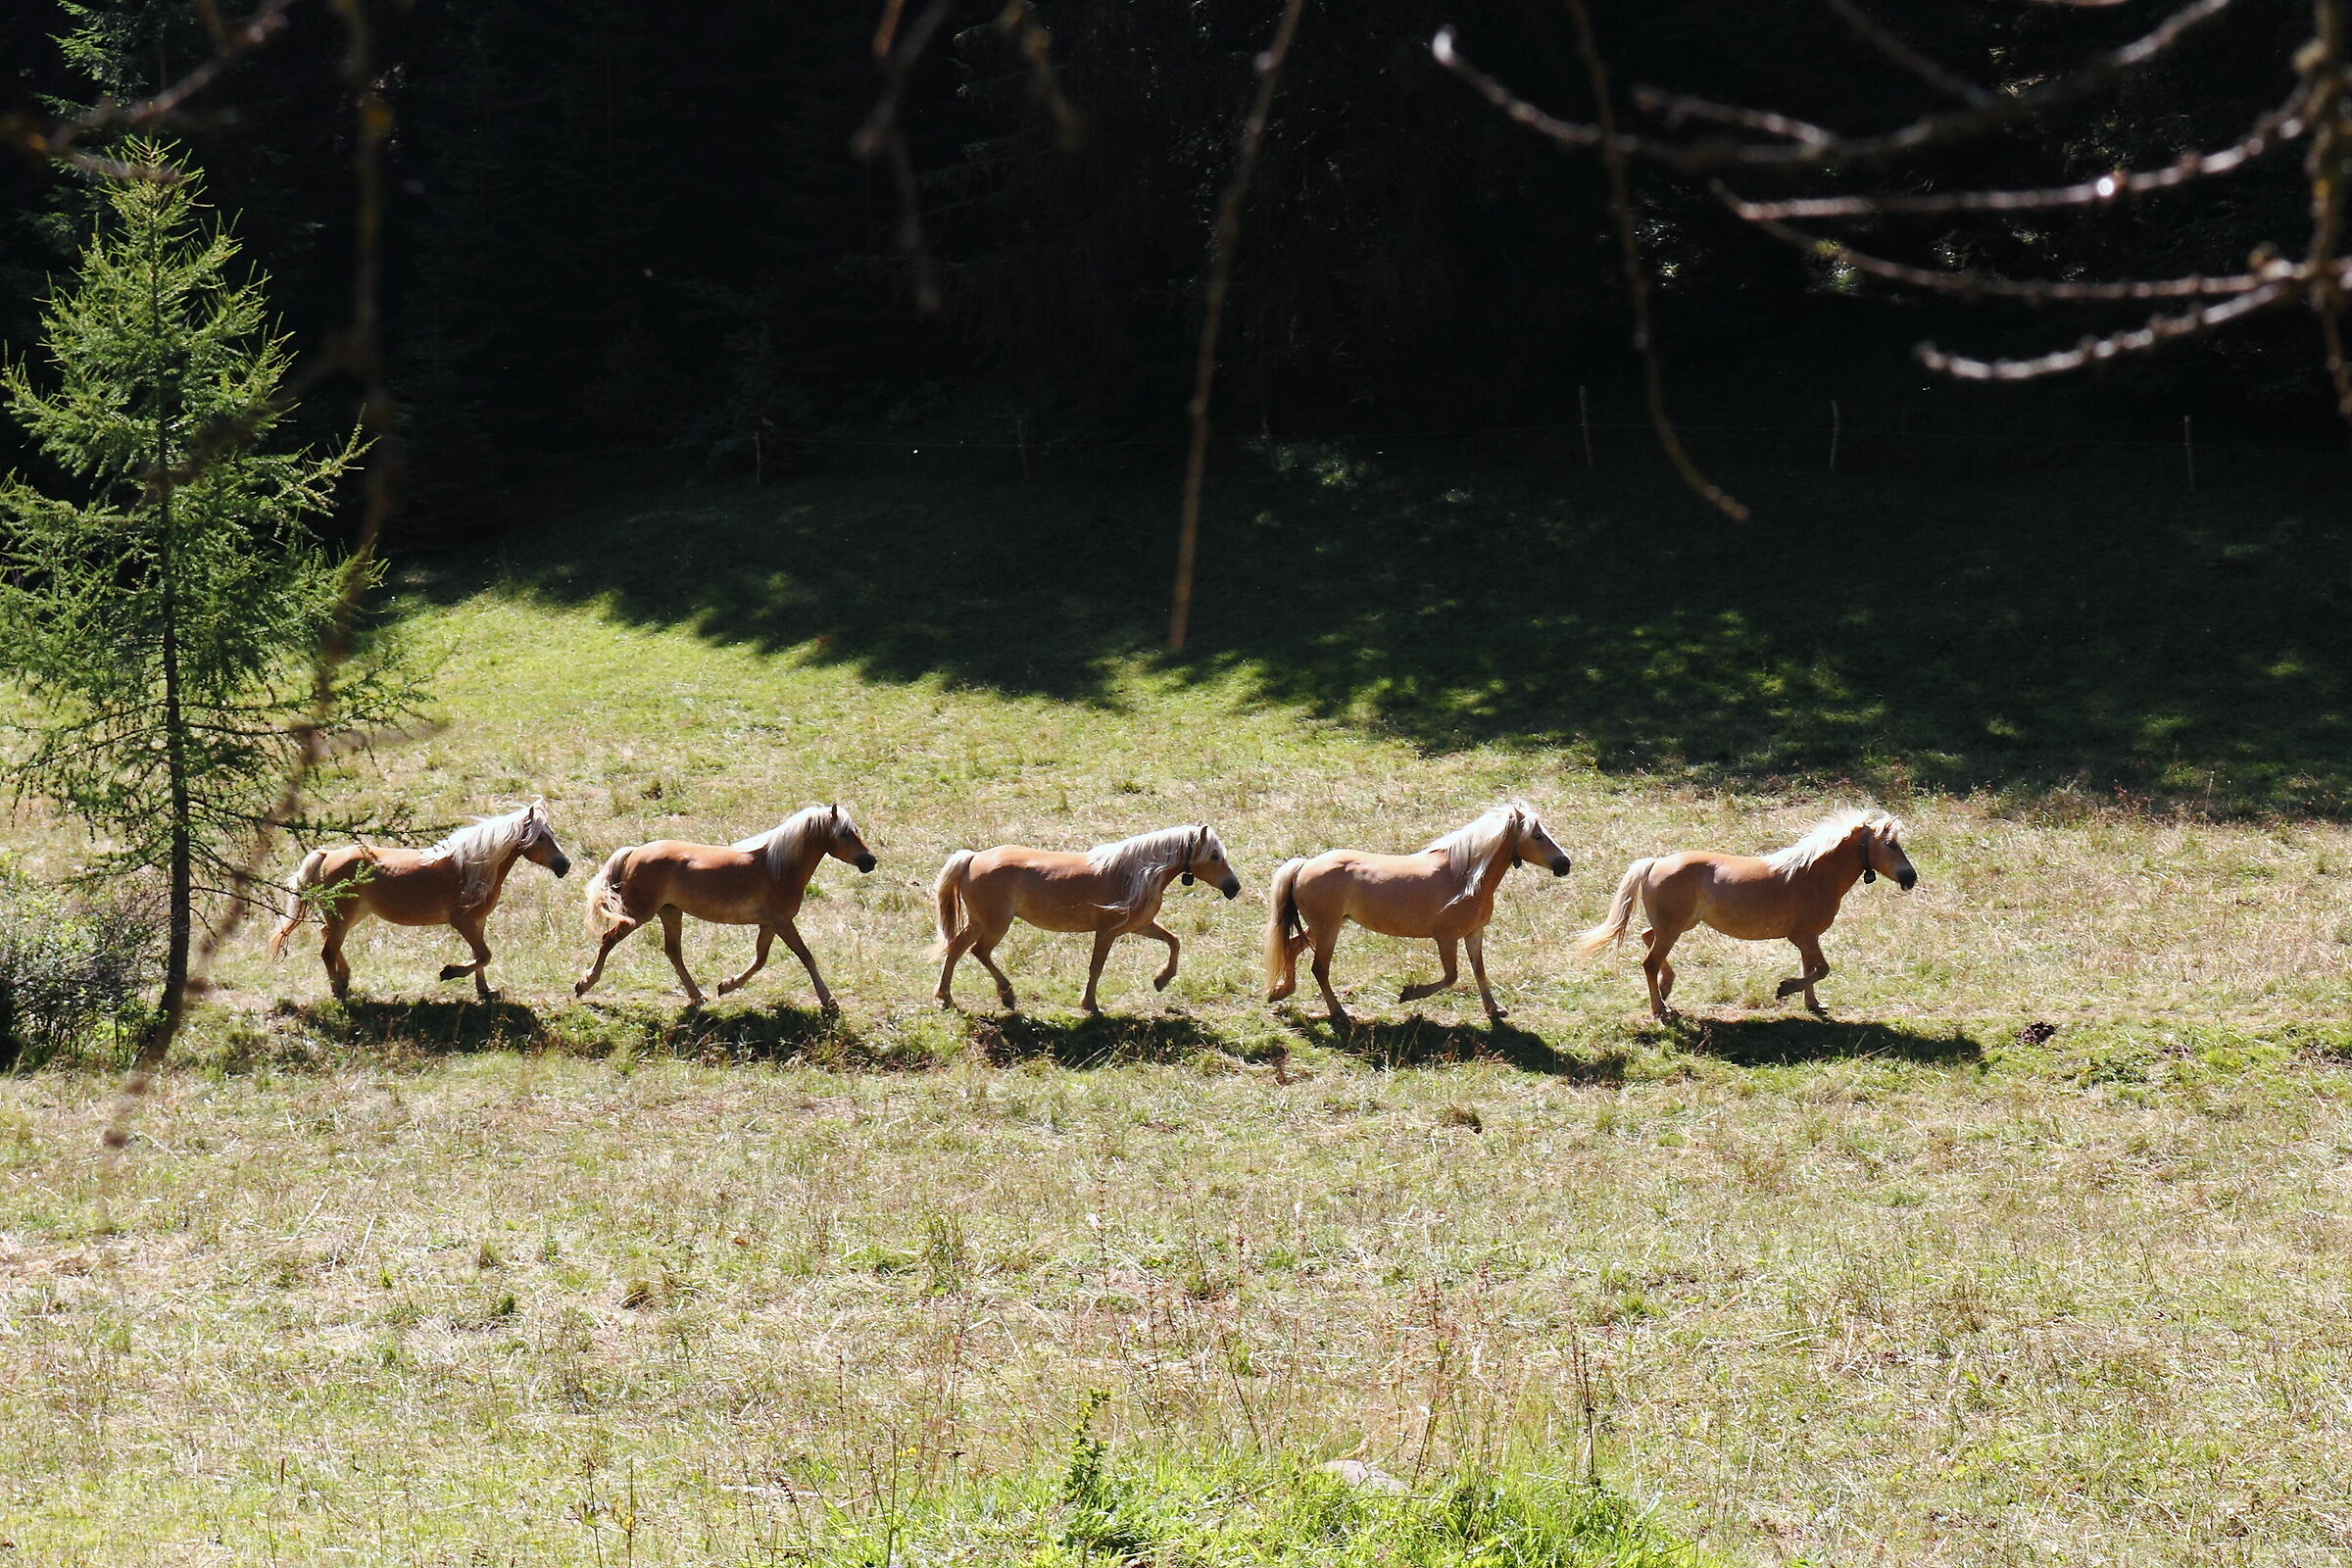  Haflinger horses grazing. Daiano, (Trento)...